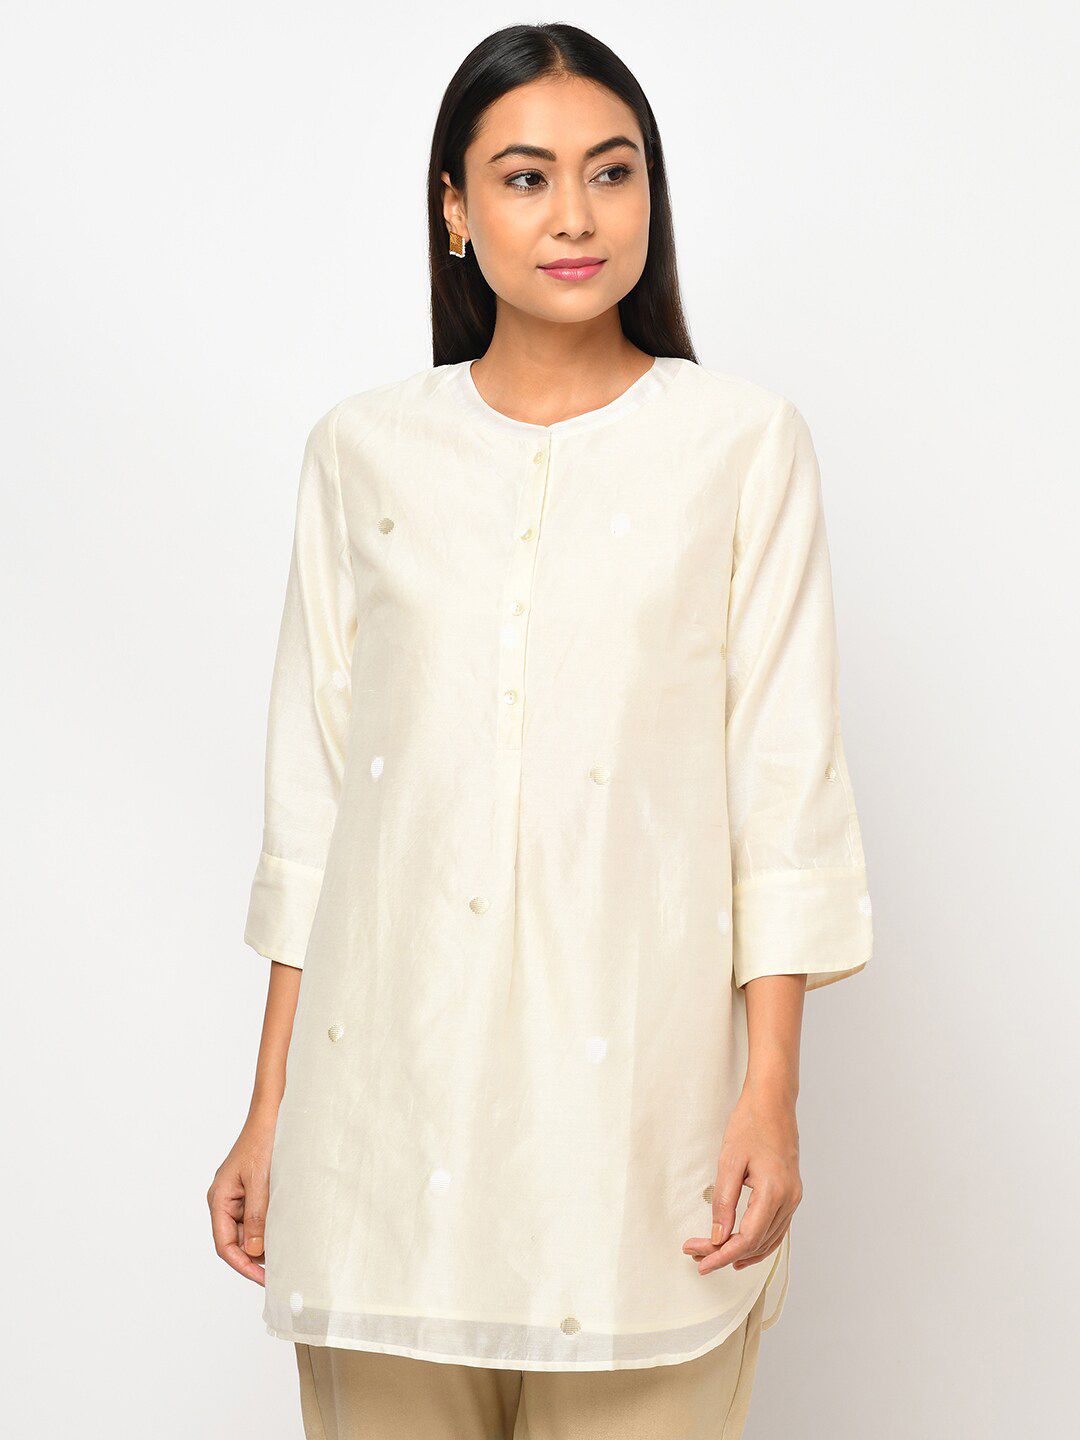 Fabindia Beige Printed Cotton Tunic Price in India